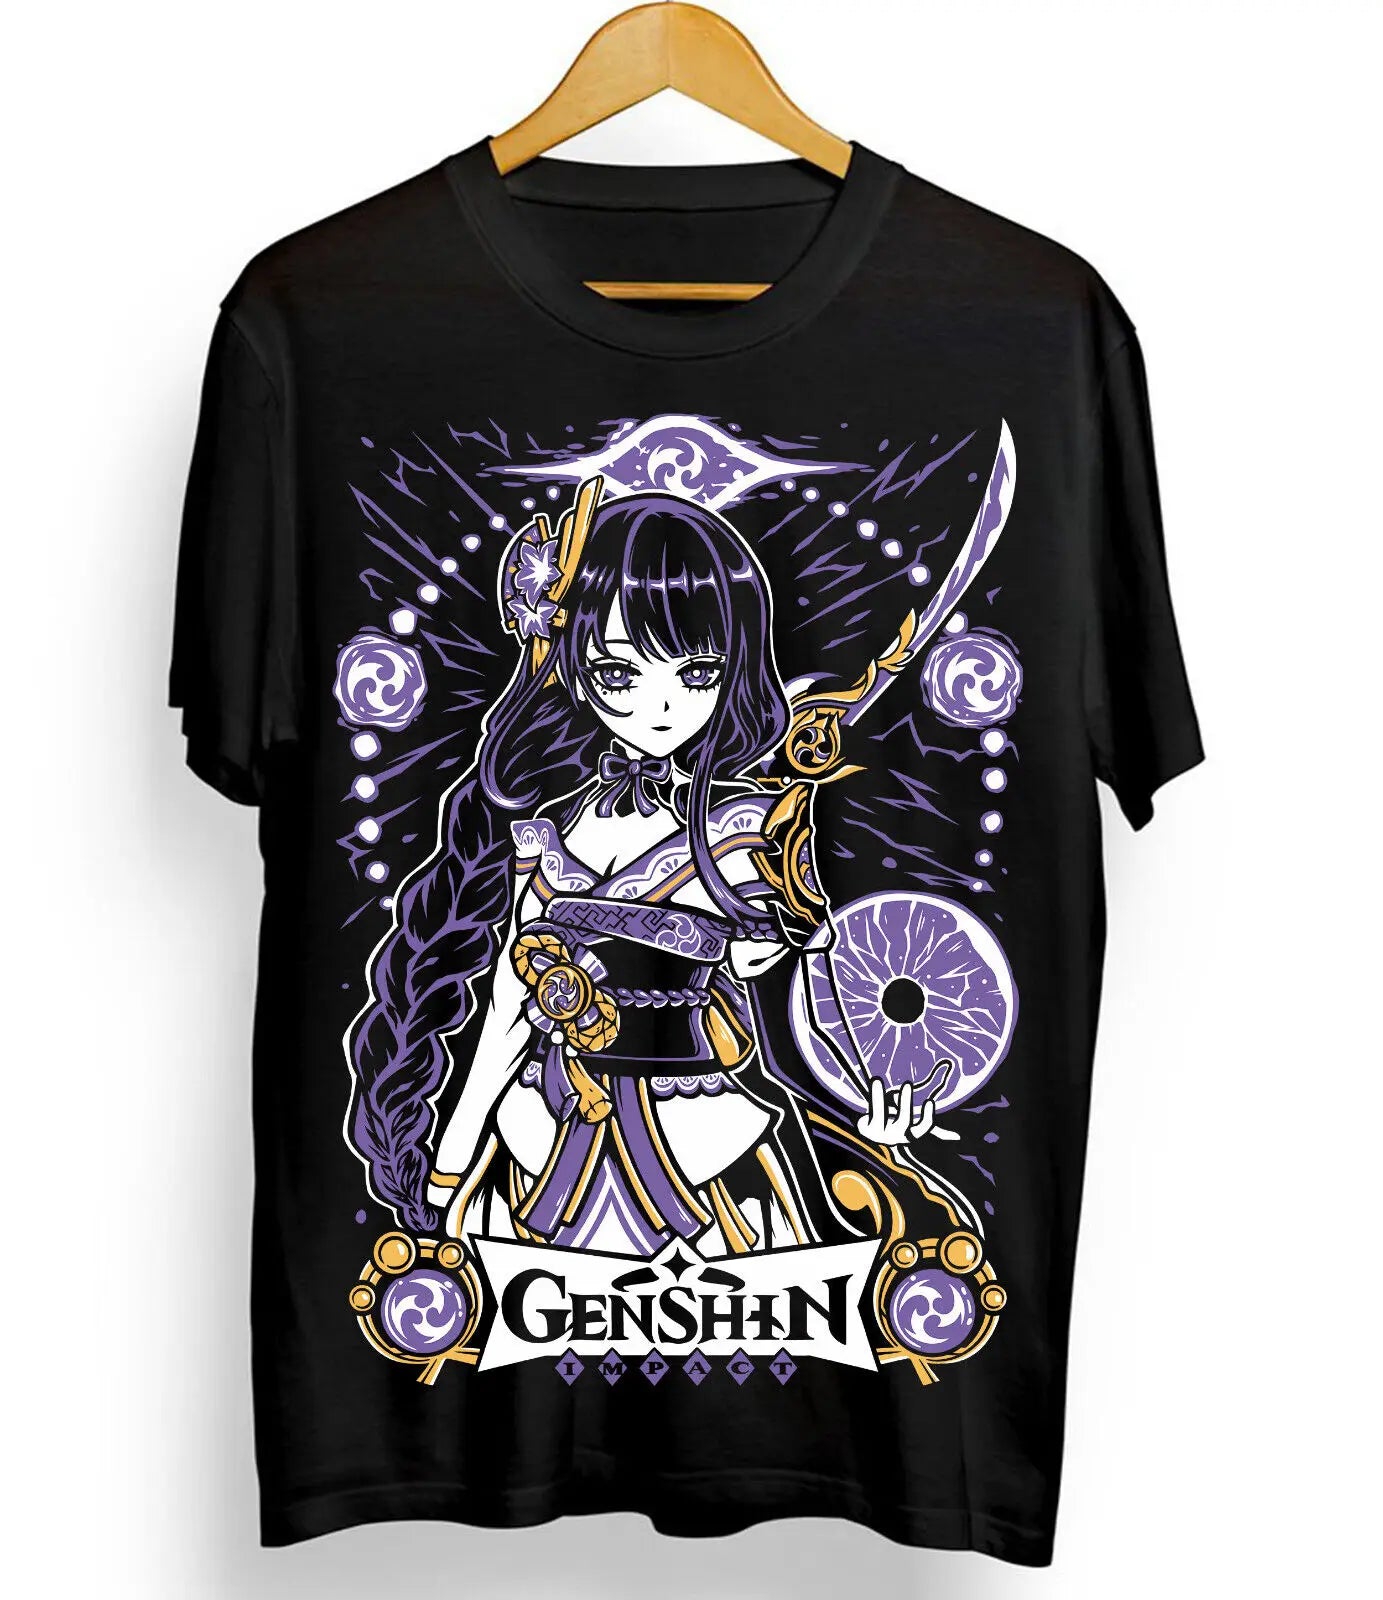 Genshin Impact Raiden Shogun T-shirt Cotton Anime Shirt